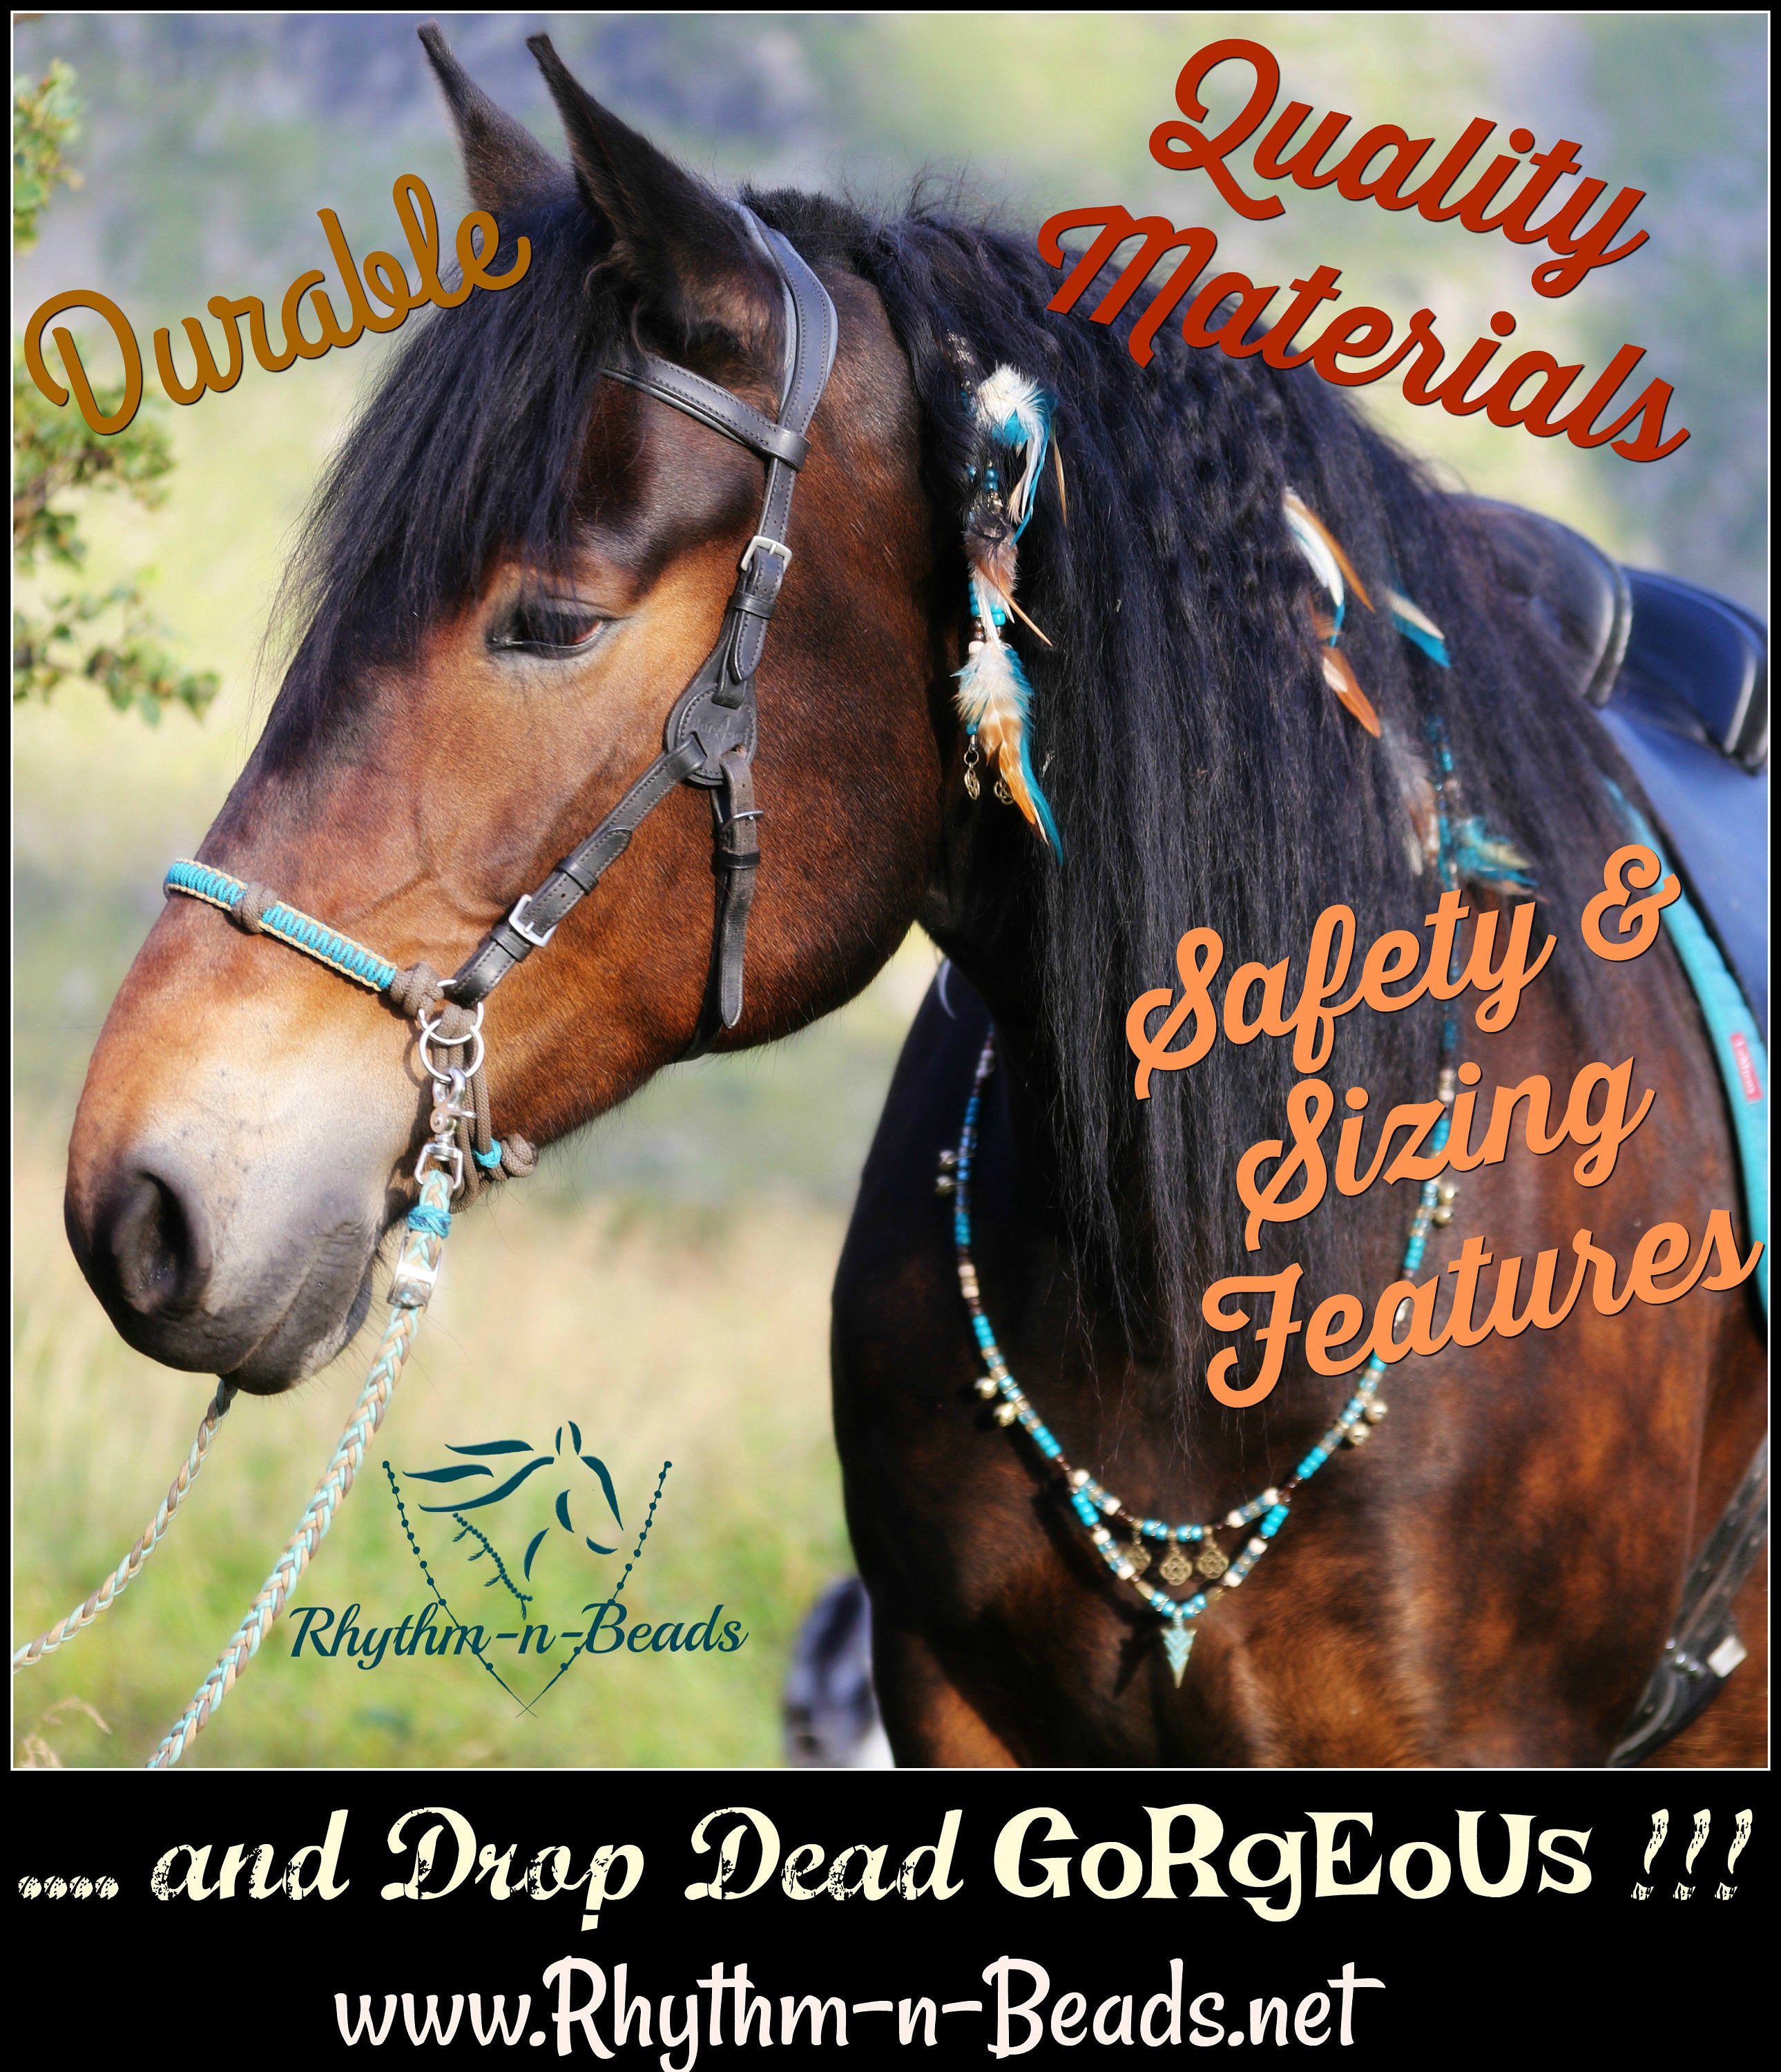 Rhythm Beads,TUXEDO, Bear Bells, Horse photo shoot accessories, Horse Necklace, trail riding bells, Rhythm Beads for horses